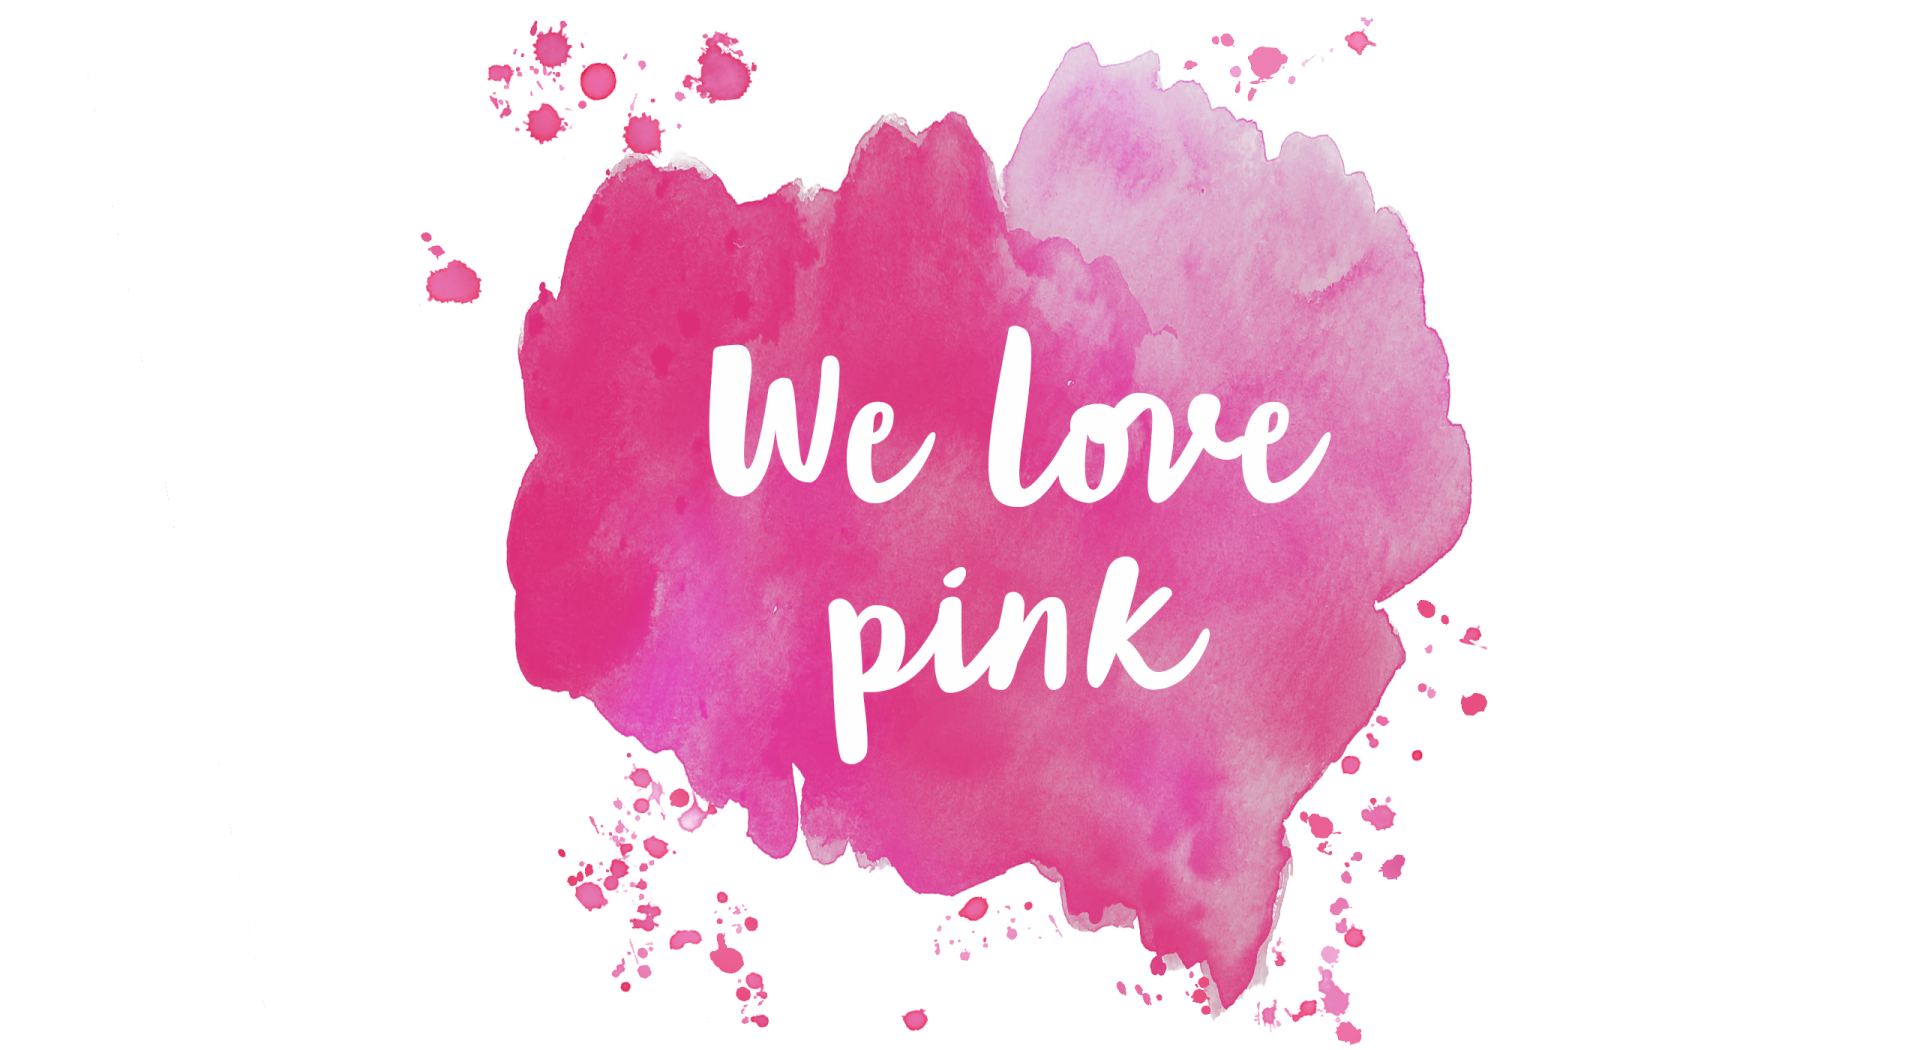 We love Pink